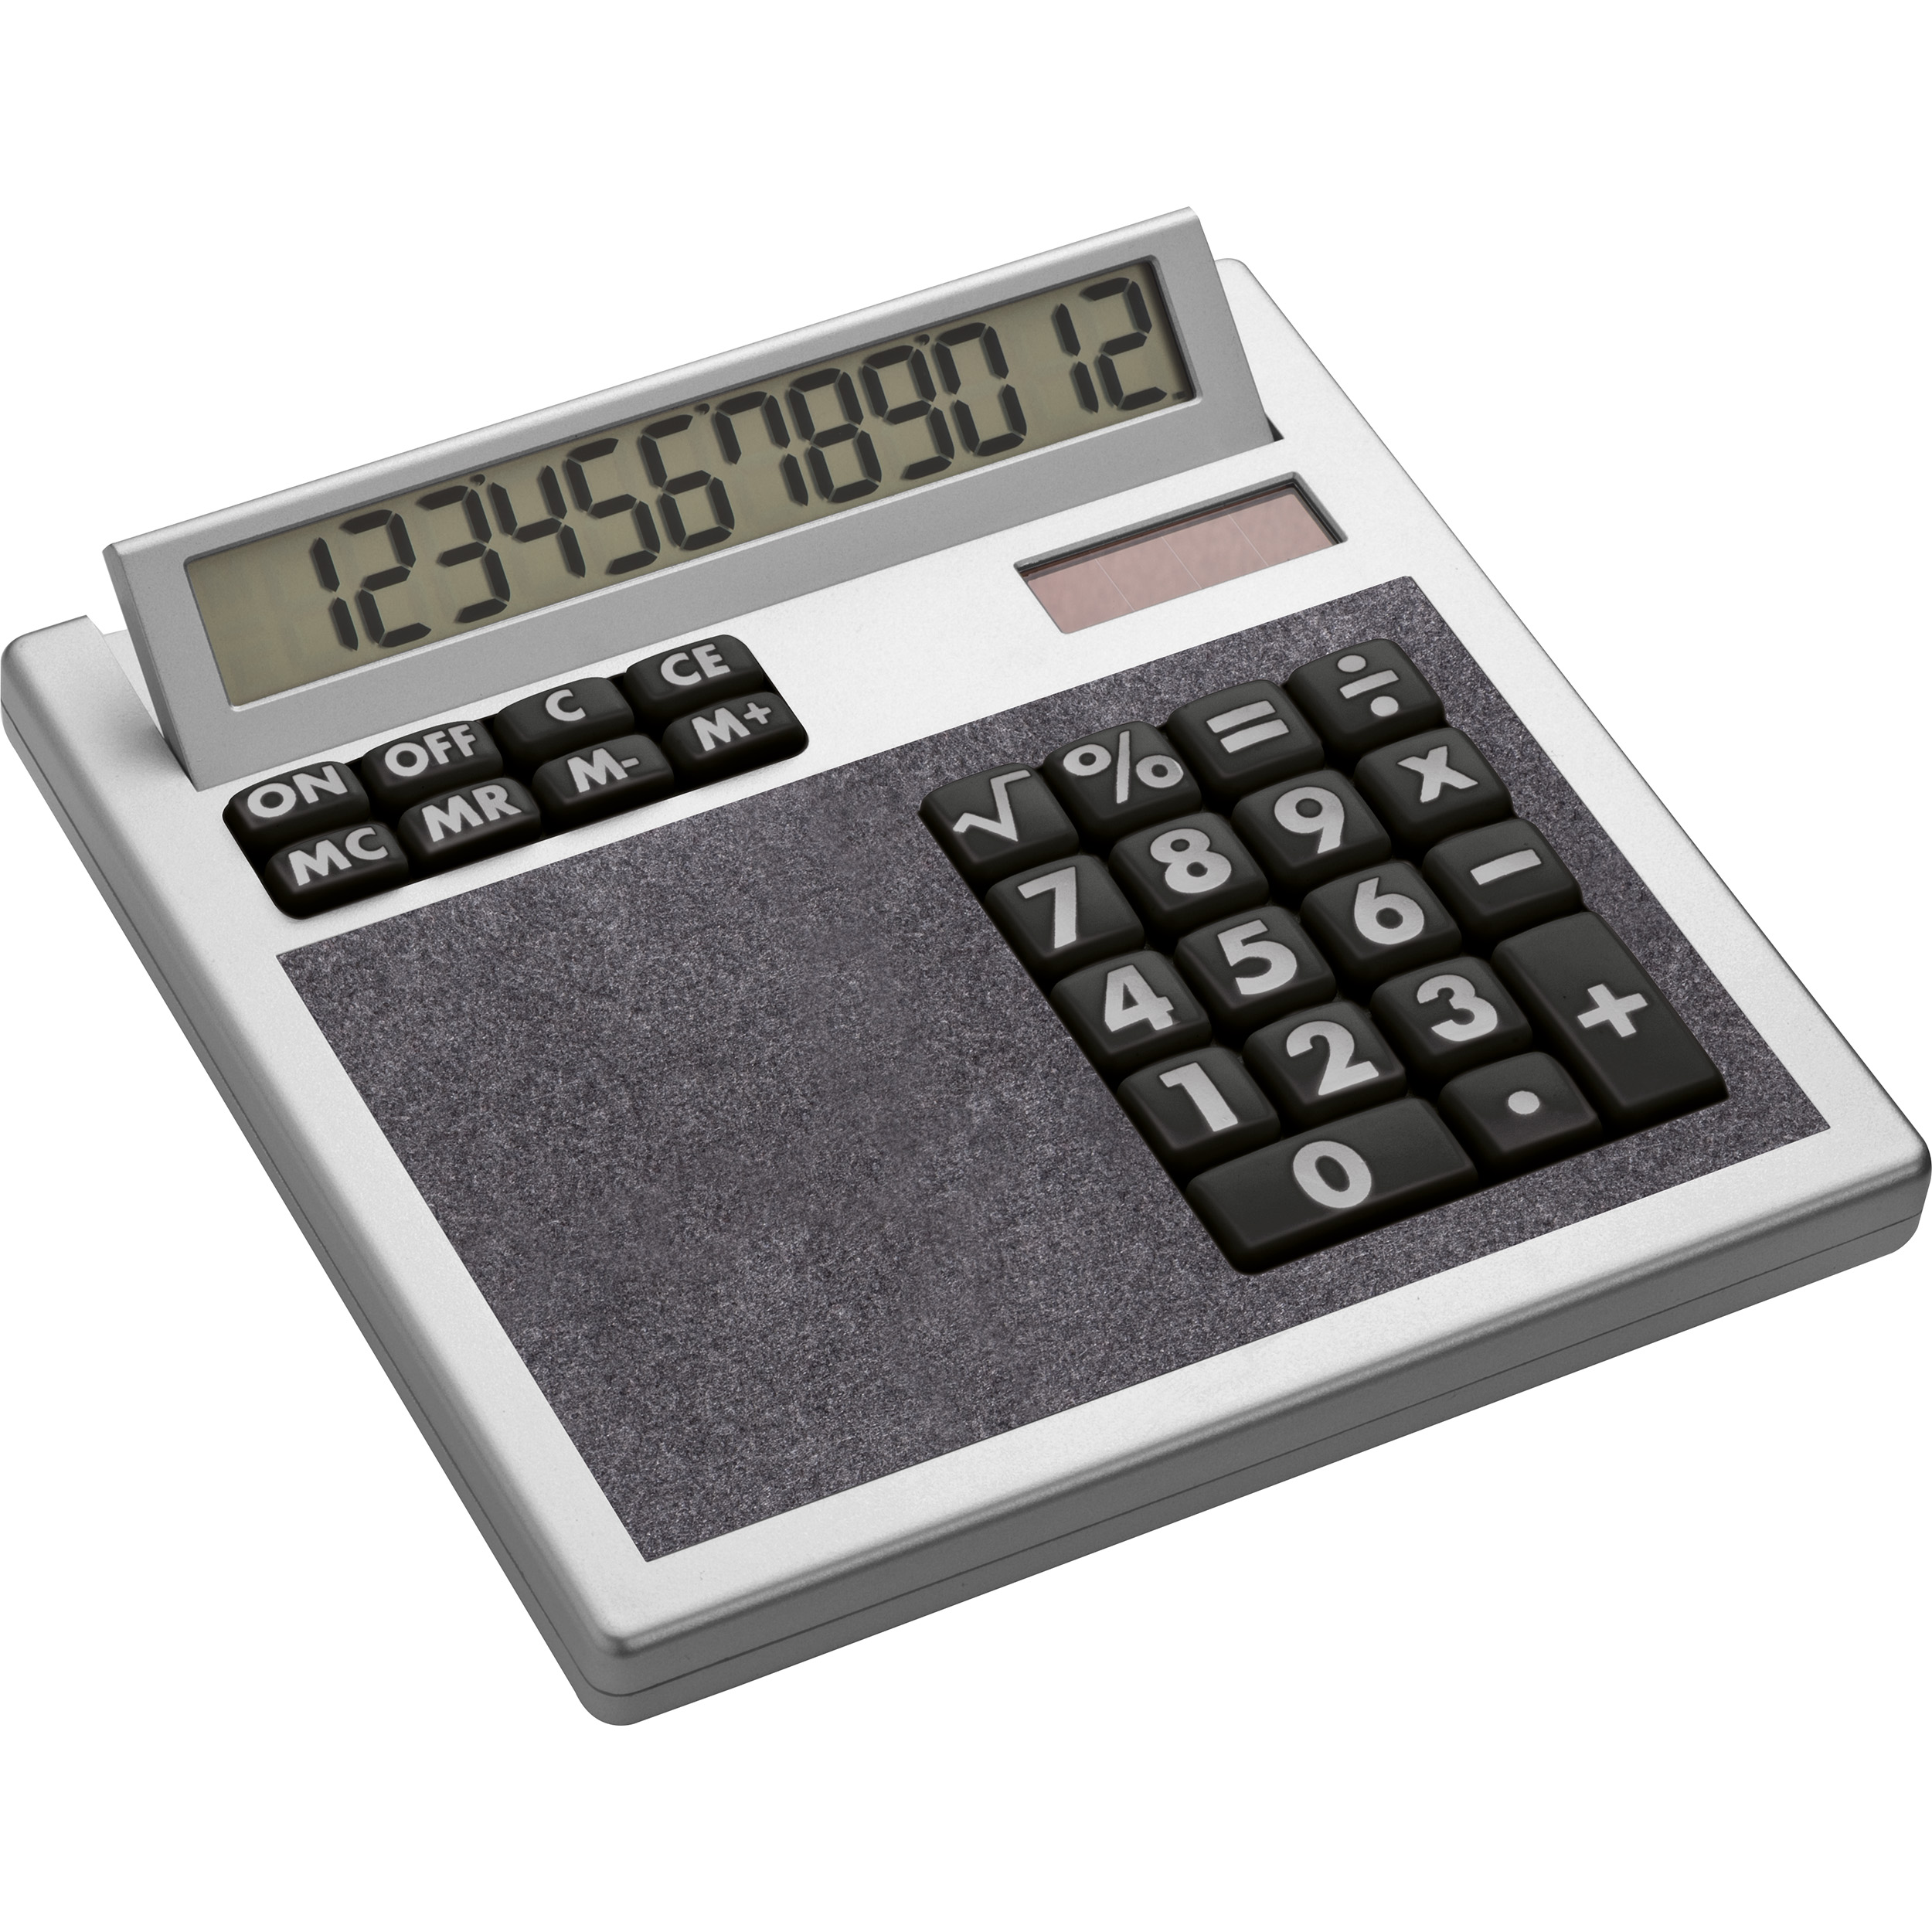 Calculatrice CrisMa avec plaque amovible